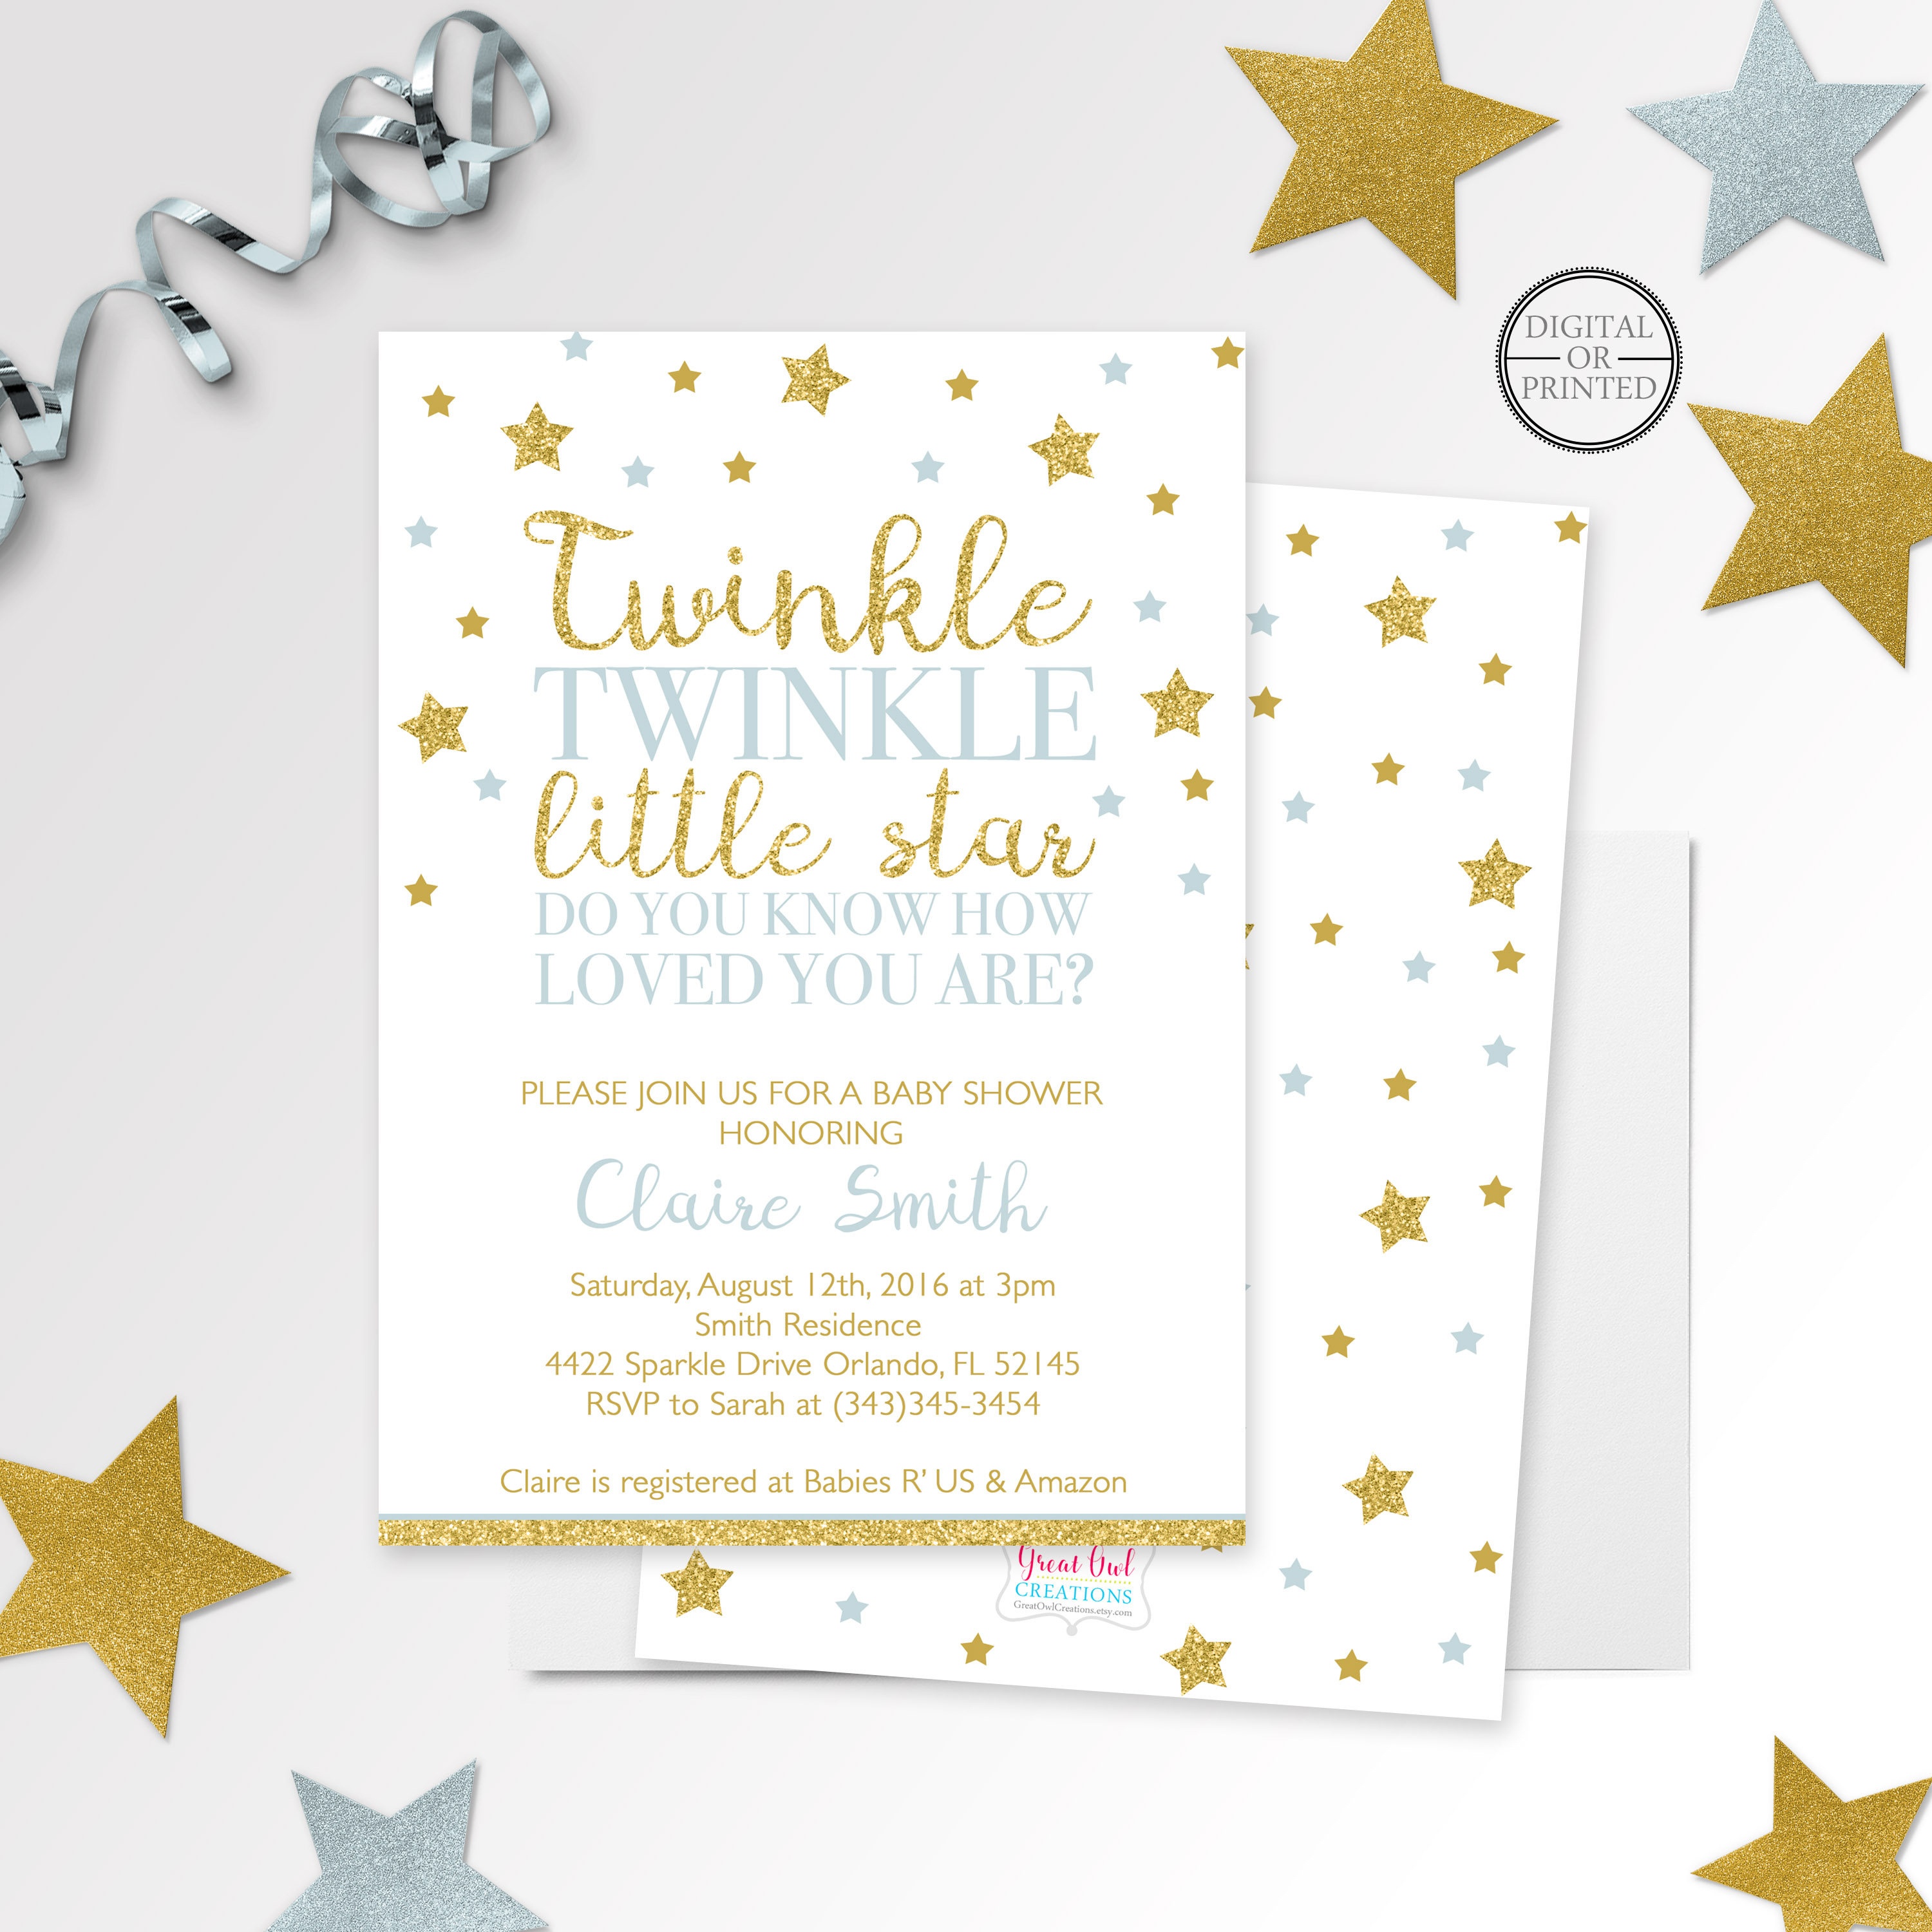 Twinkle Twinkle Little Star Baby Shower Invitation Printed Or | Etsy - Free Printable Twinkle Twinkle Little Star Baby Shower Invitations